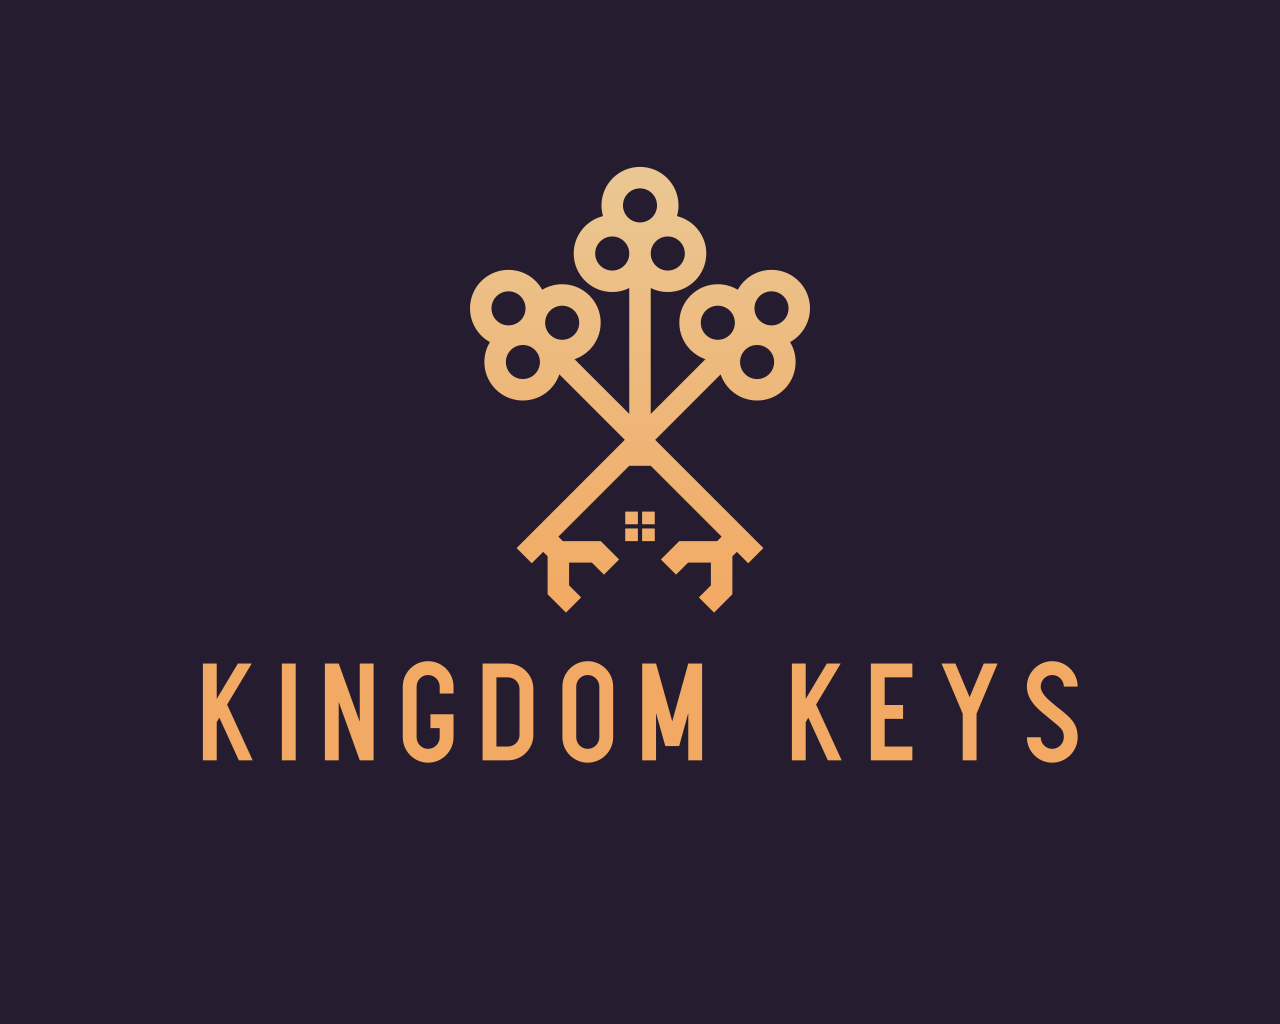 Kingdom keys's logo